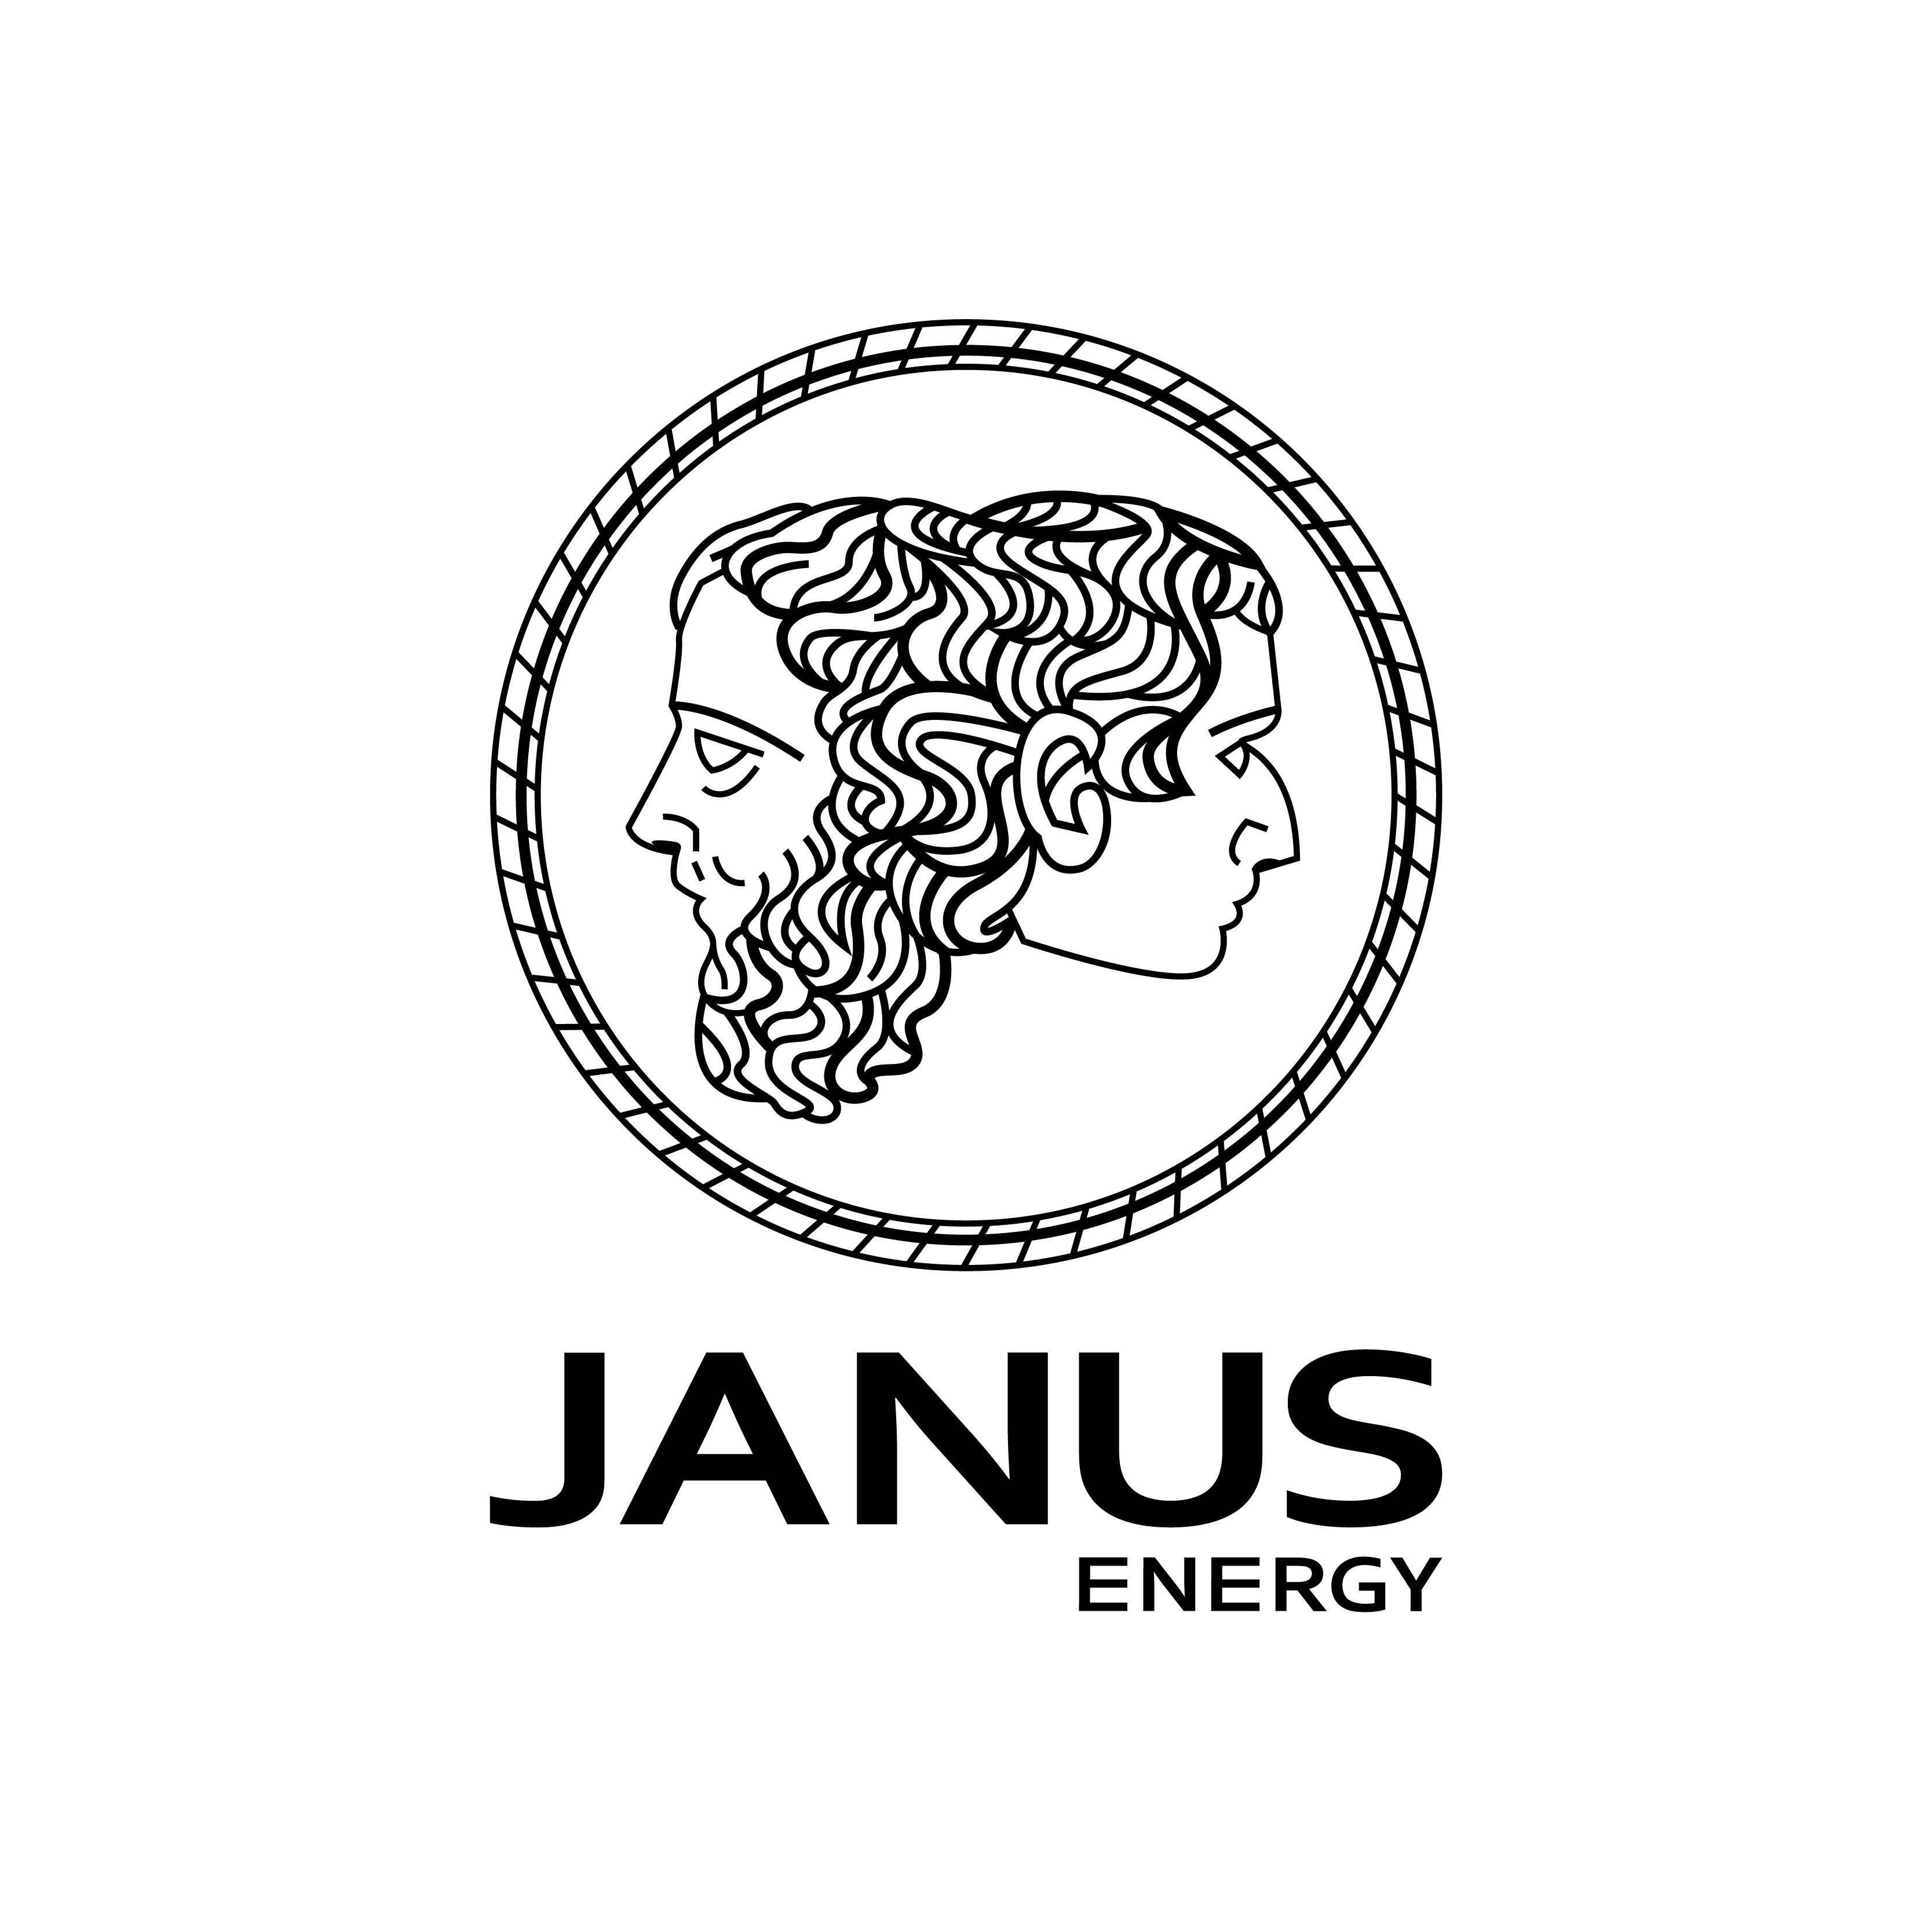  JANUS ENERGY